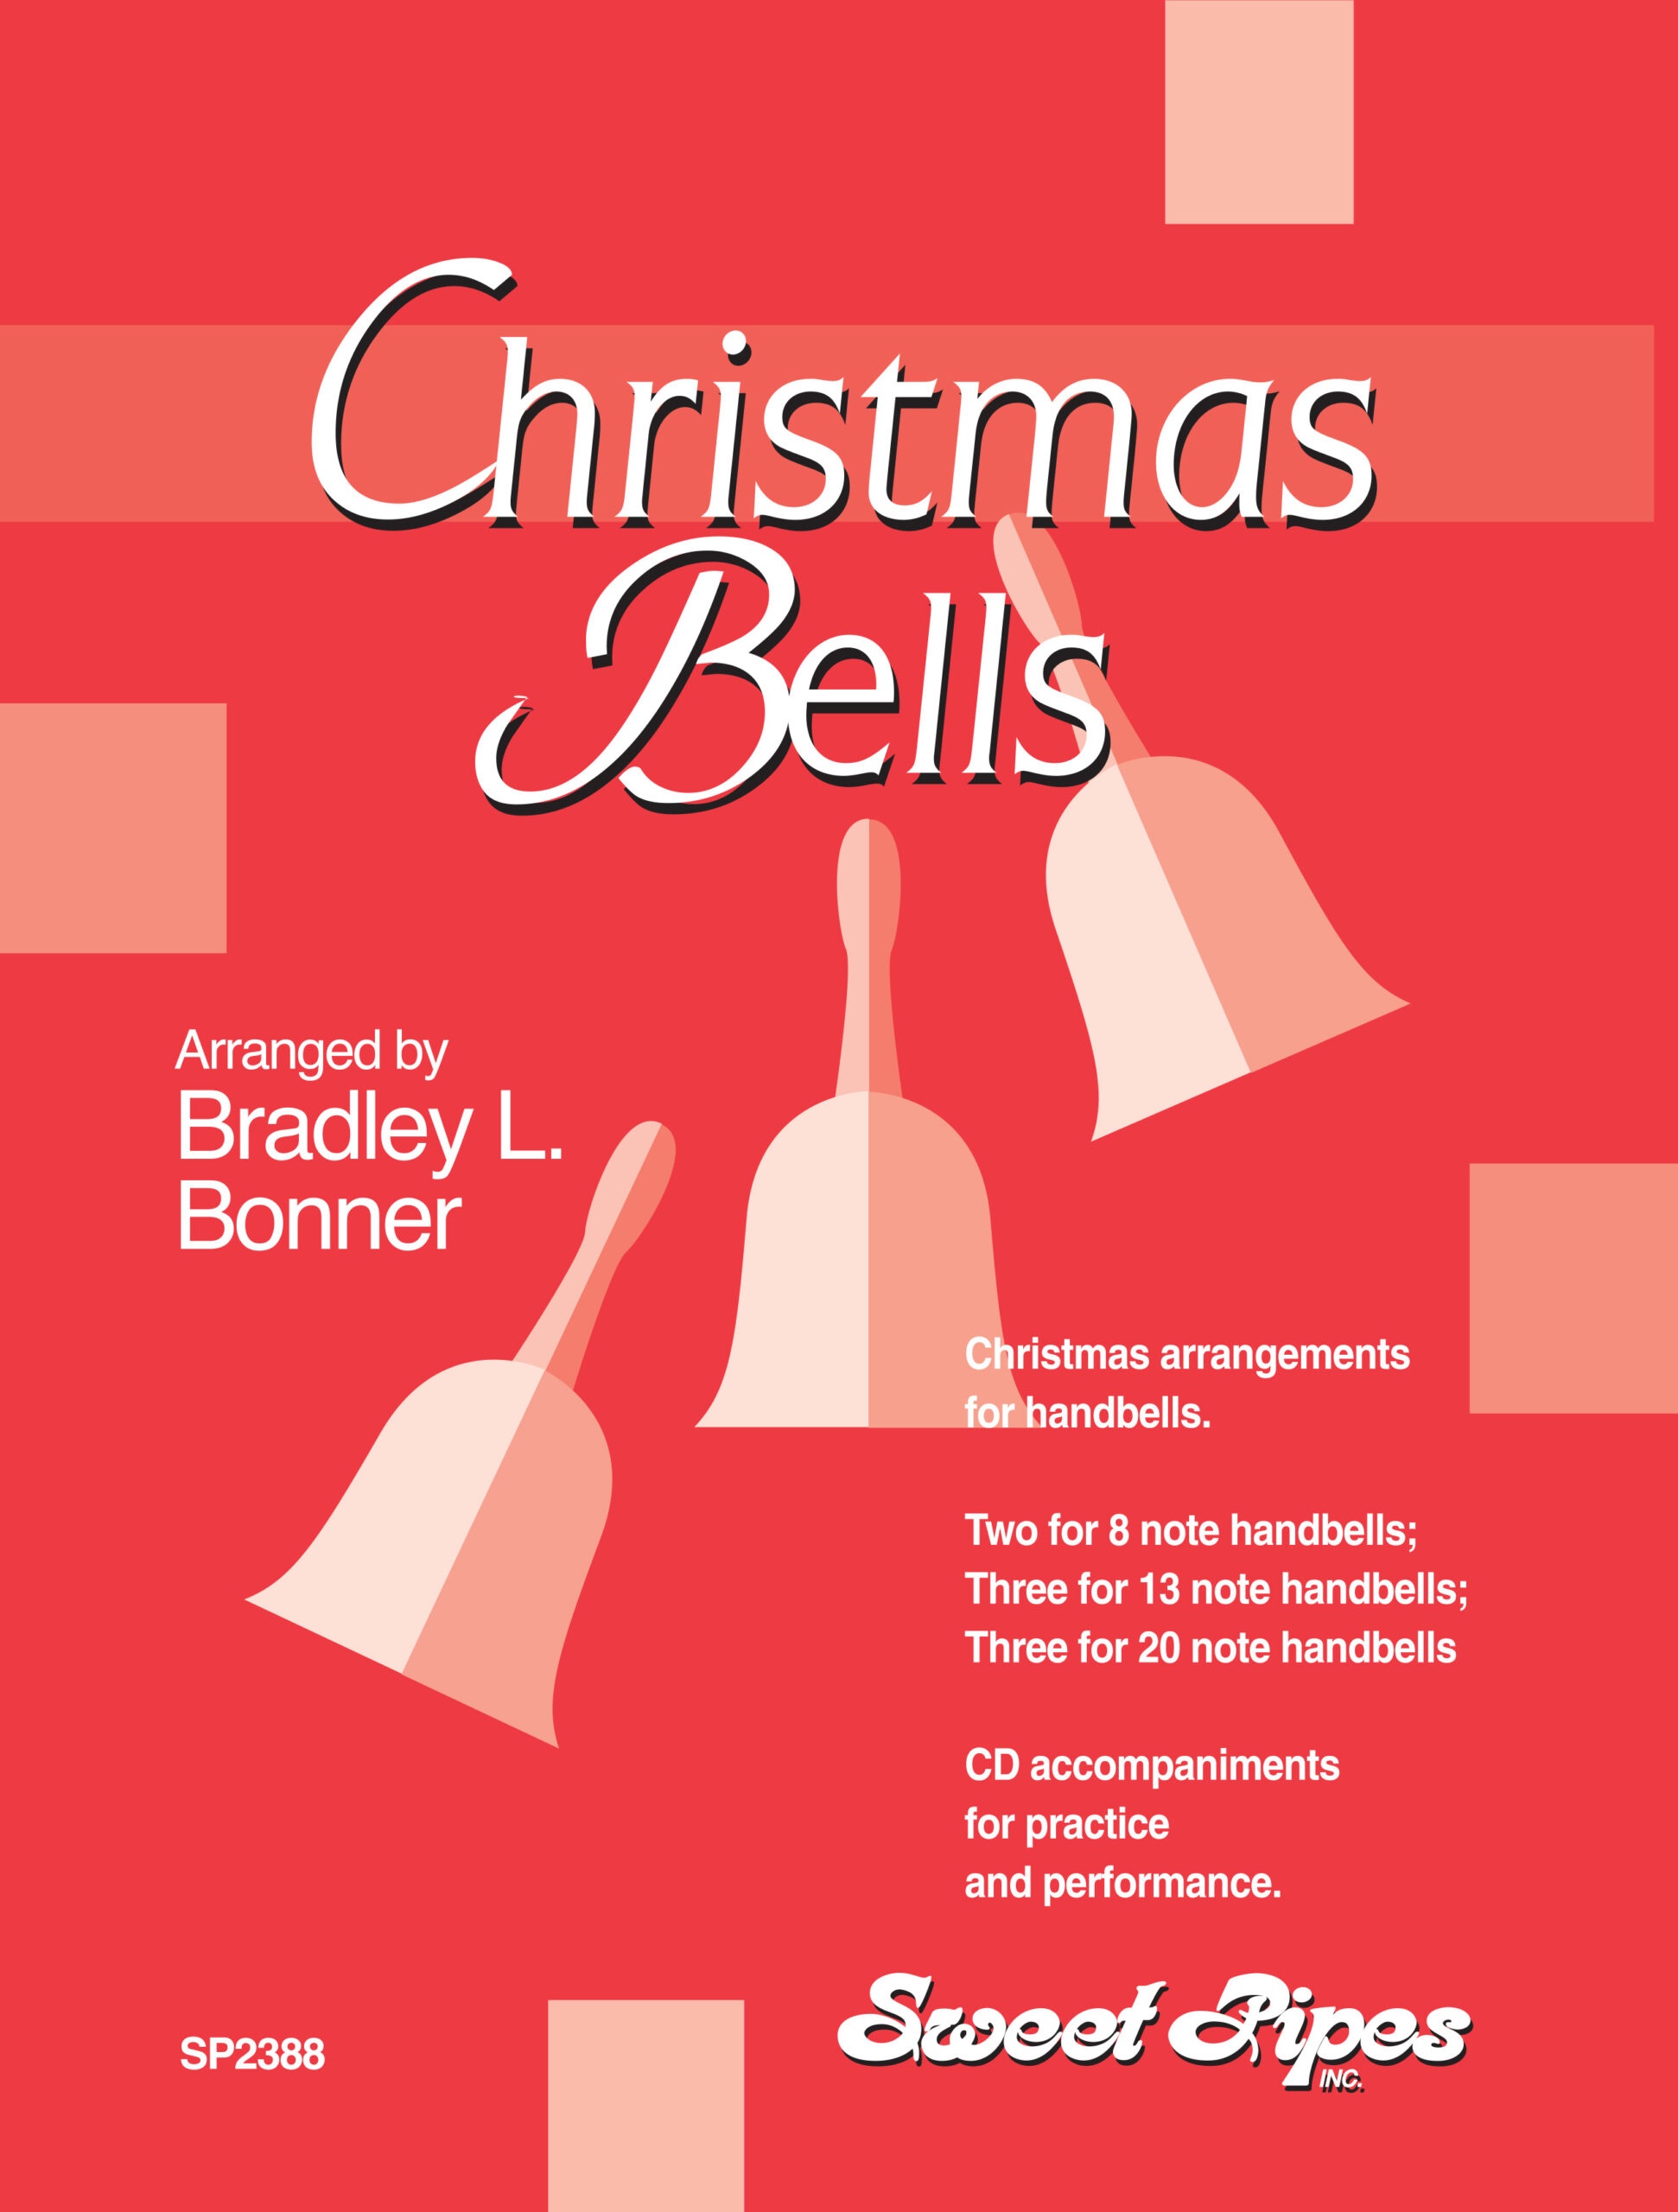 PRETYZOOM 2pcs Hand Bell Santa Claus Hand Bells Christmas Bells Metal School Bells Pet Bells Call Service Hand Bells Musical for Dinner Calling Home Christmas Party Favors 